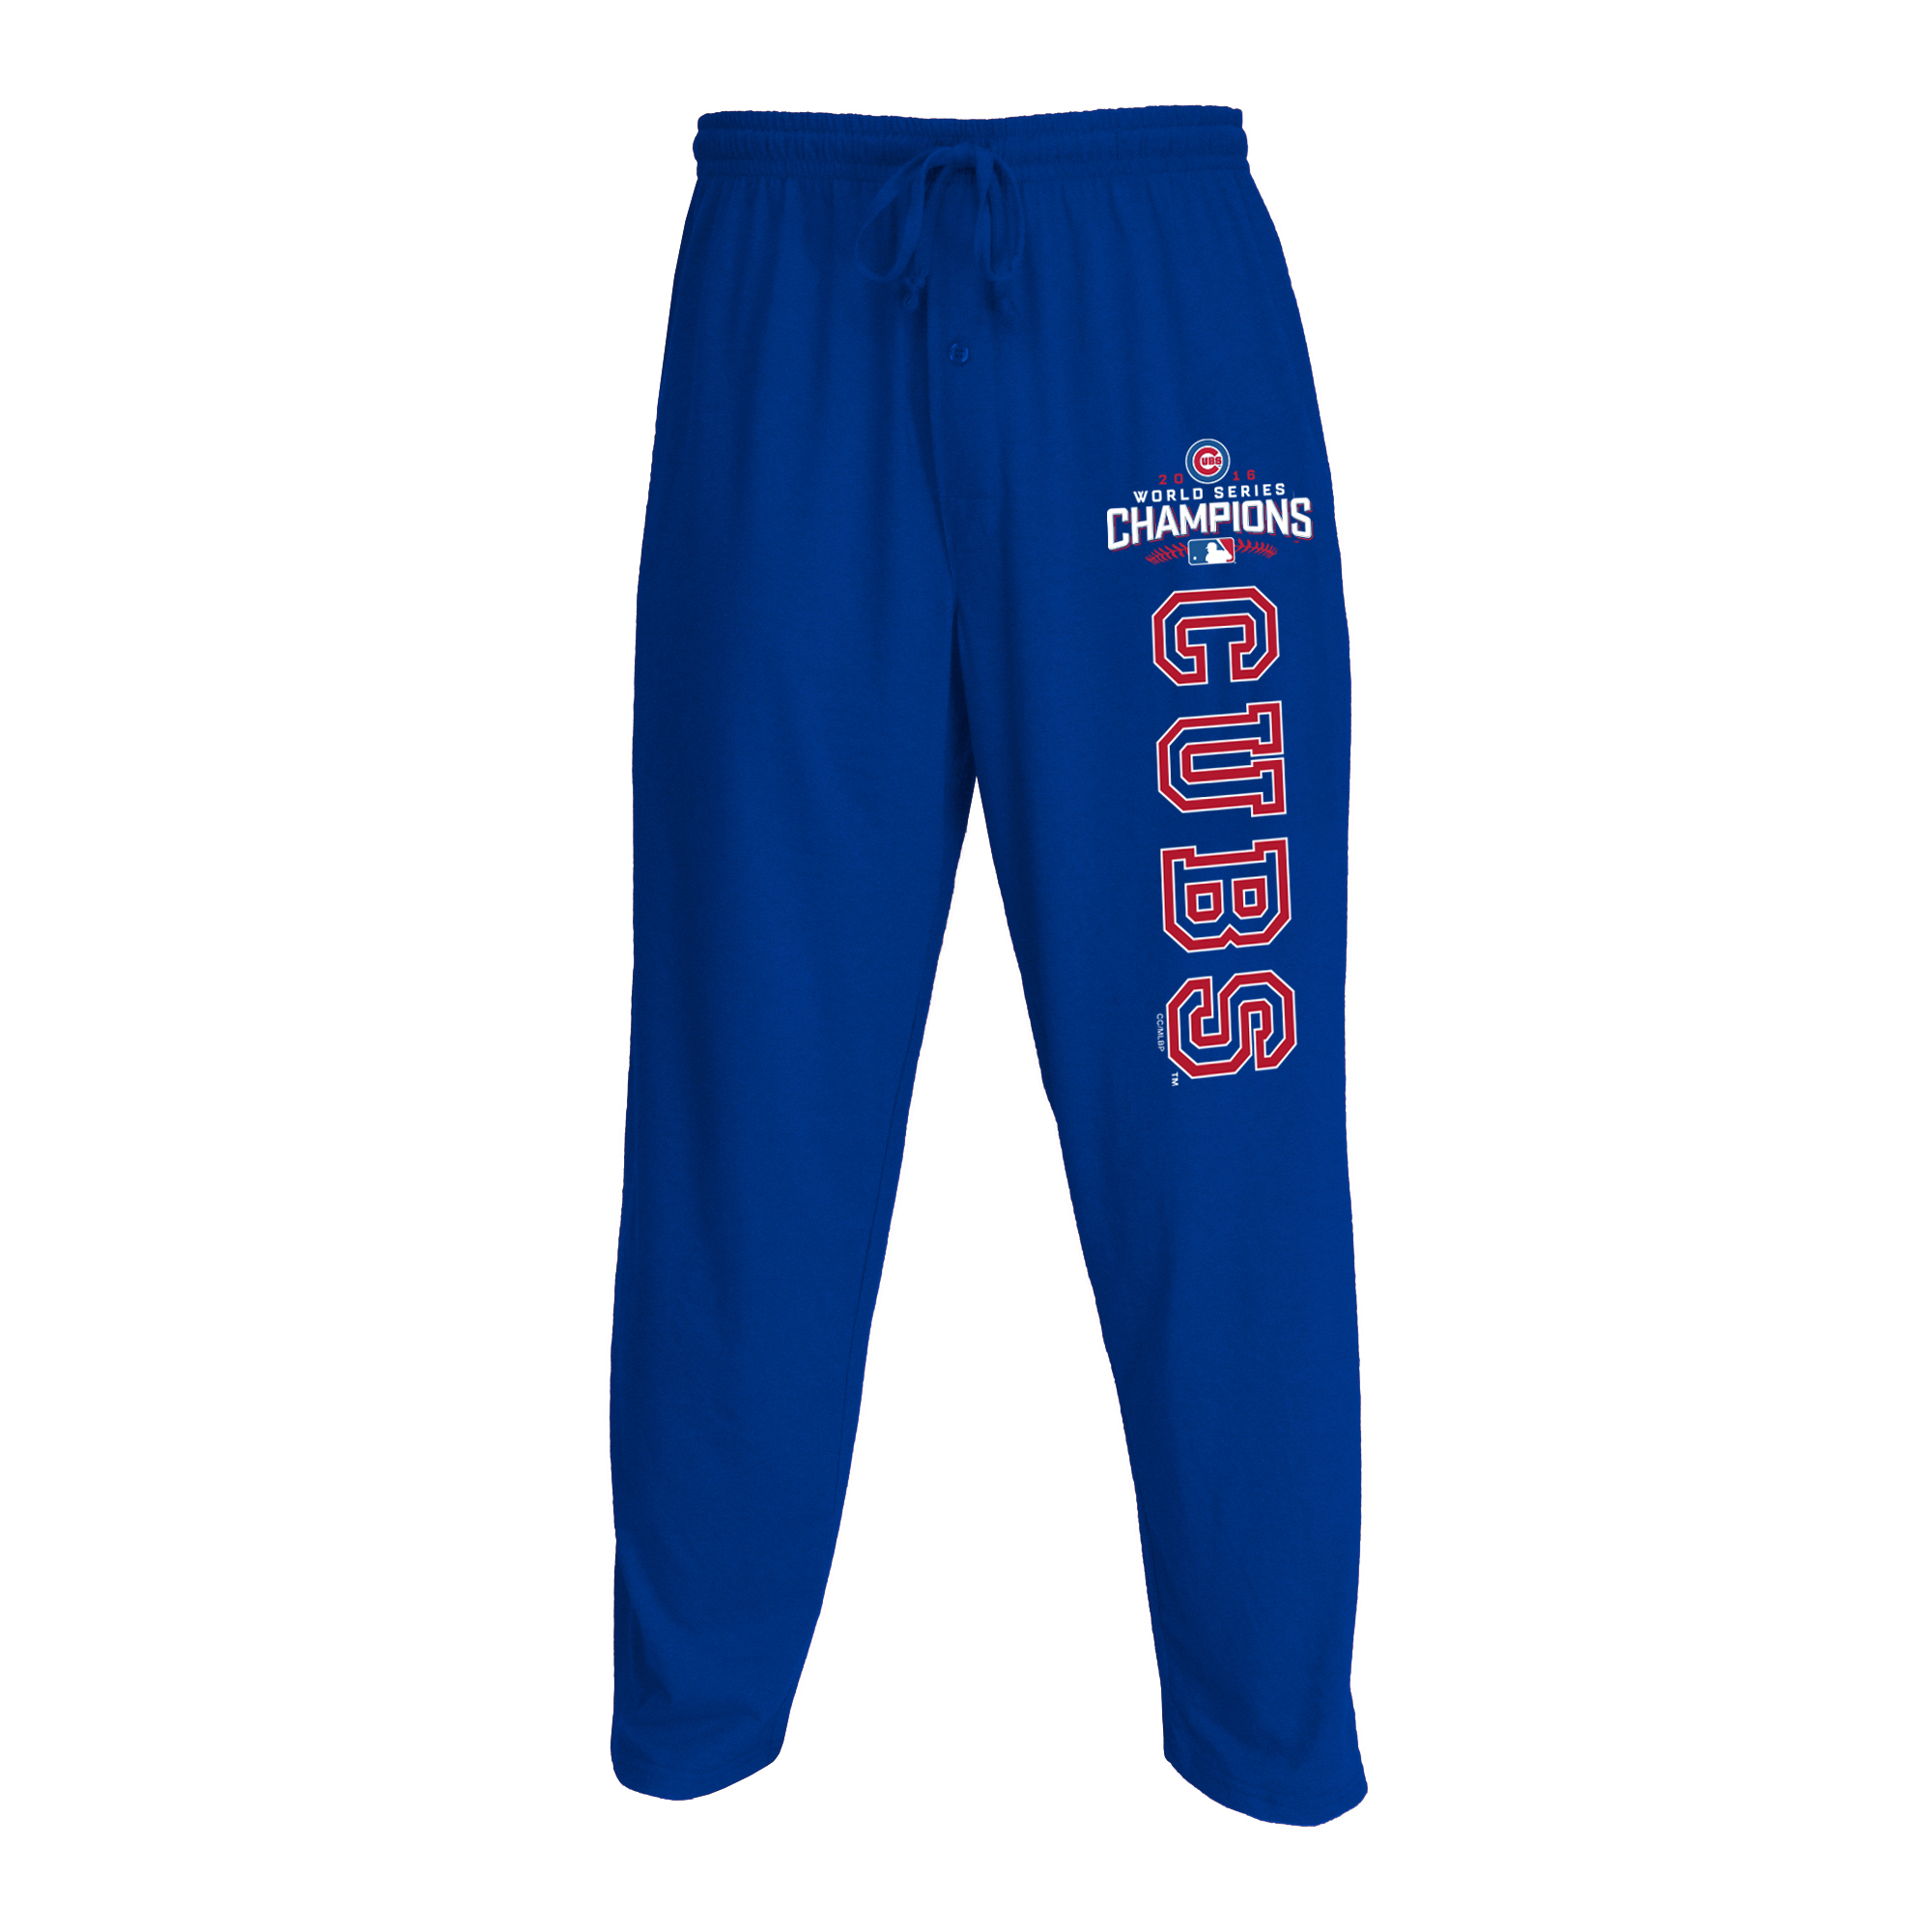 MLB Men's 2016 World Series Champion Pajama Pants - Chicago Cubs